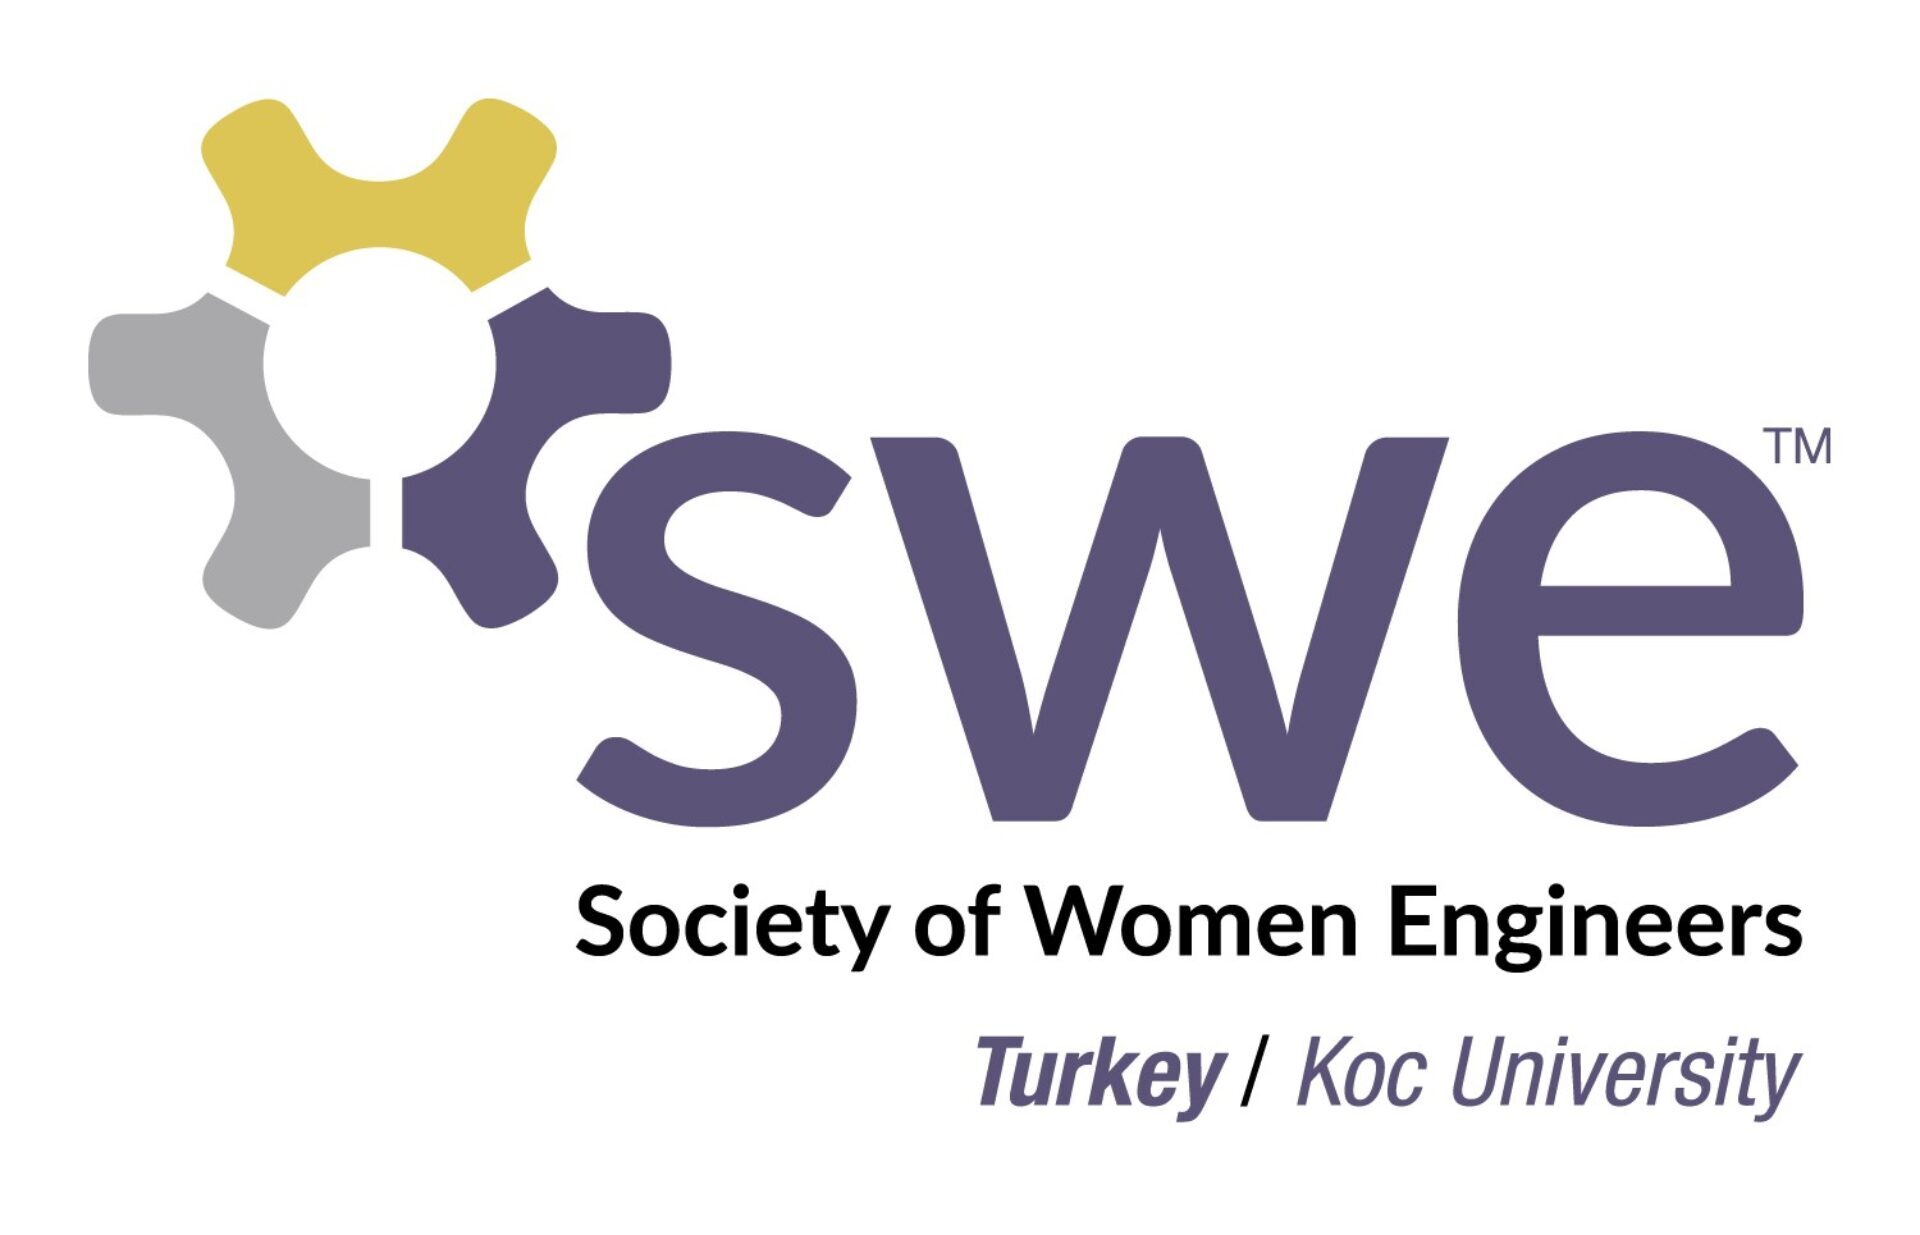 SOCIETY OF WOMEN ENGINEERS